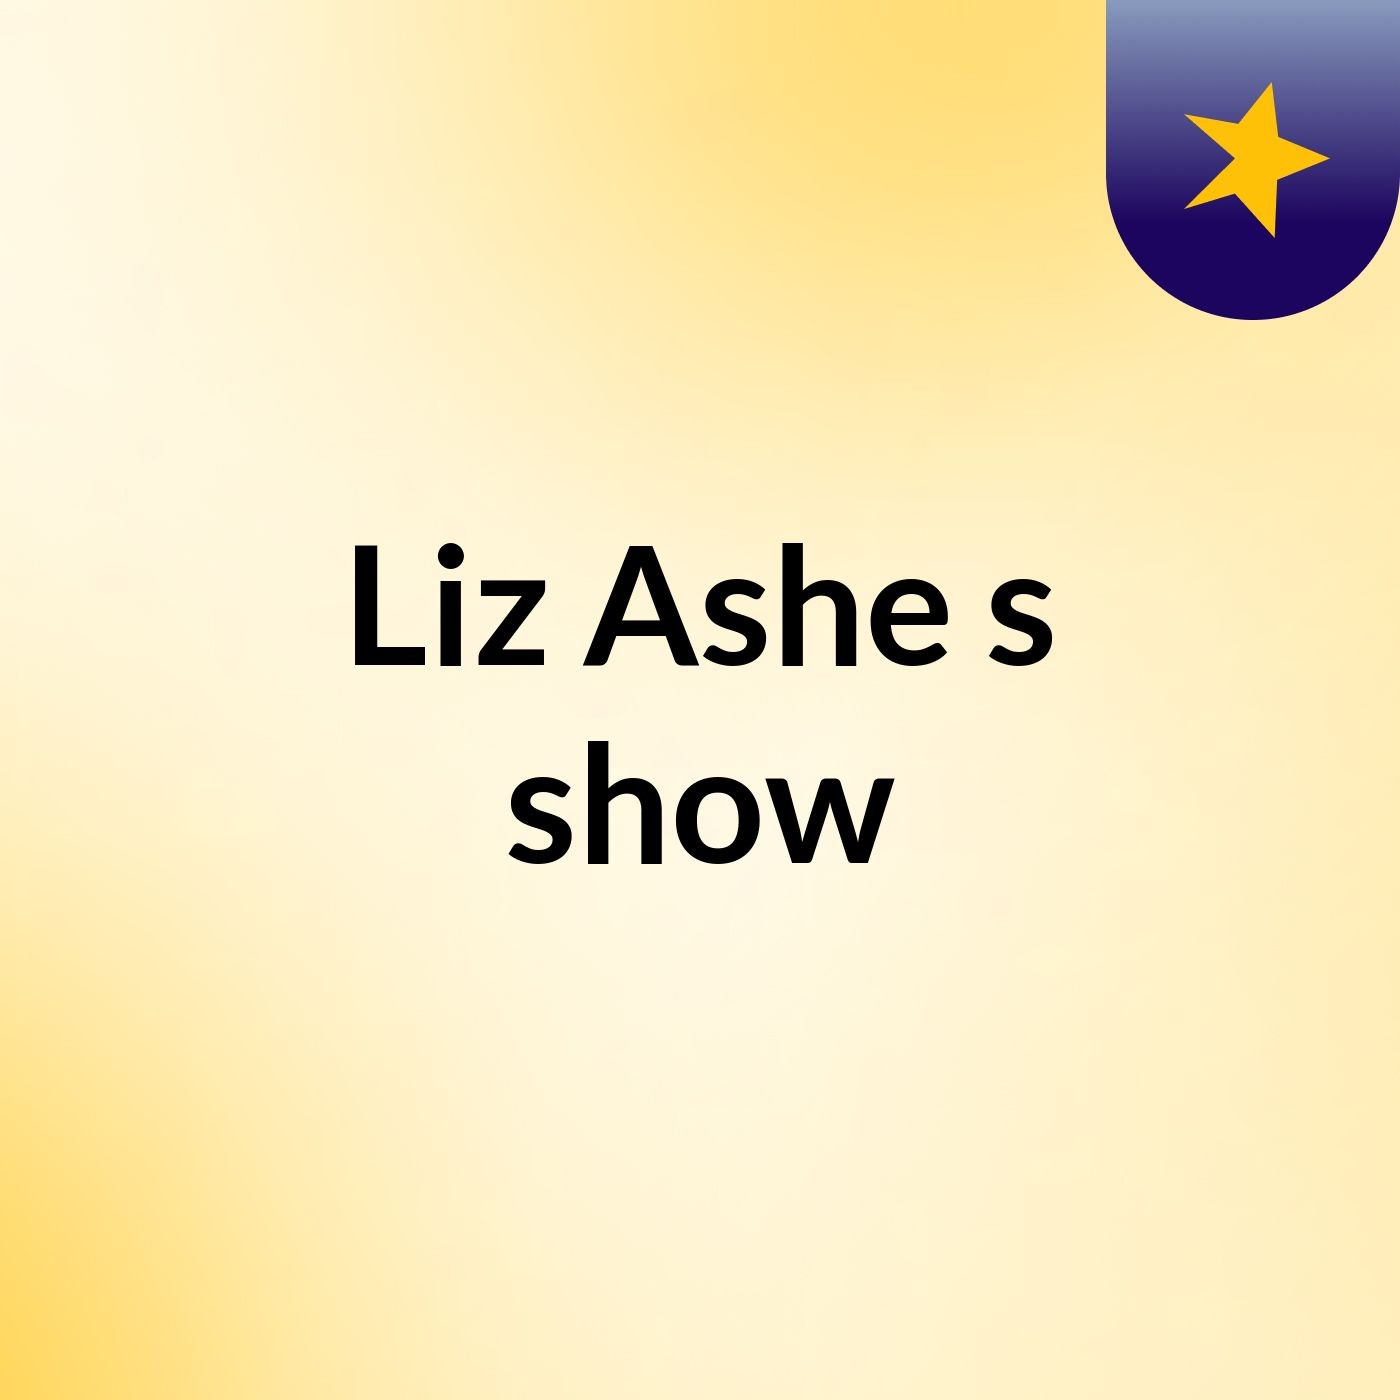 Liz Ashe's show